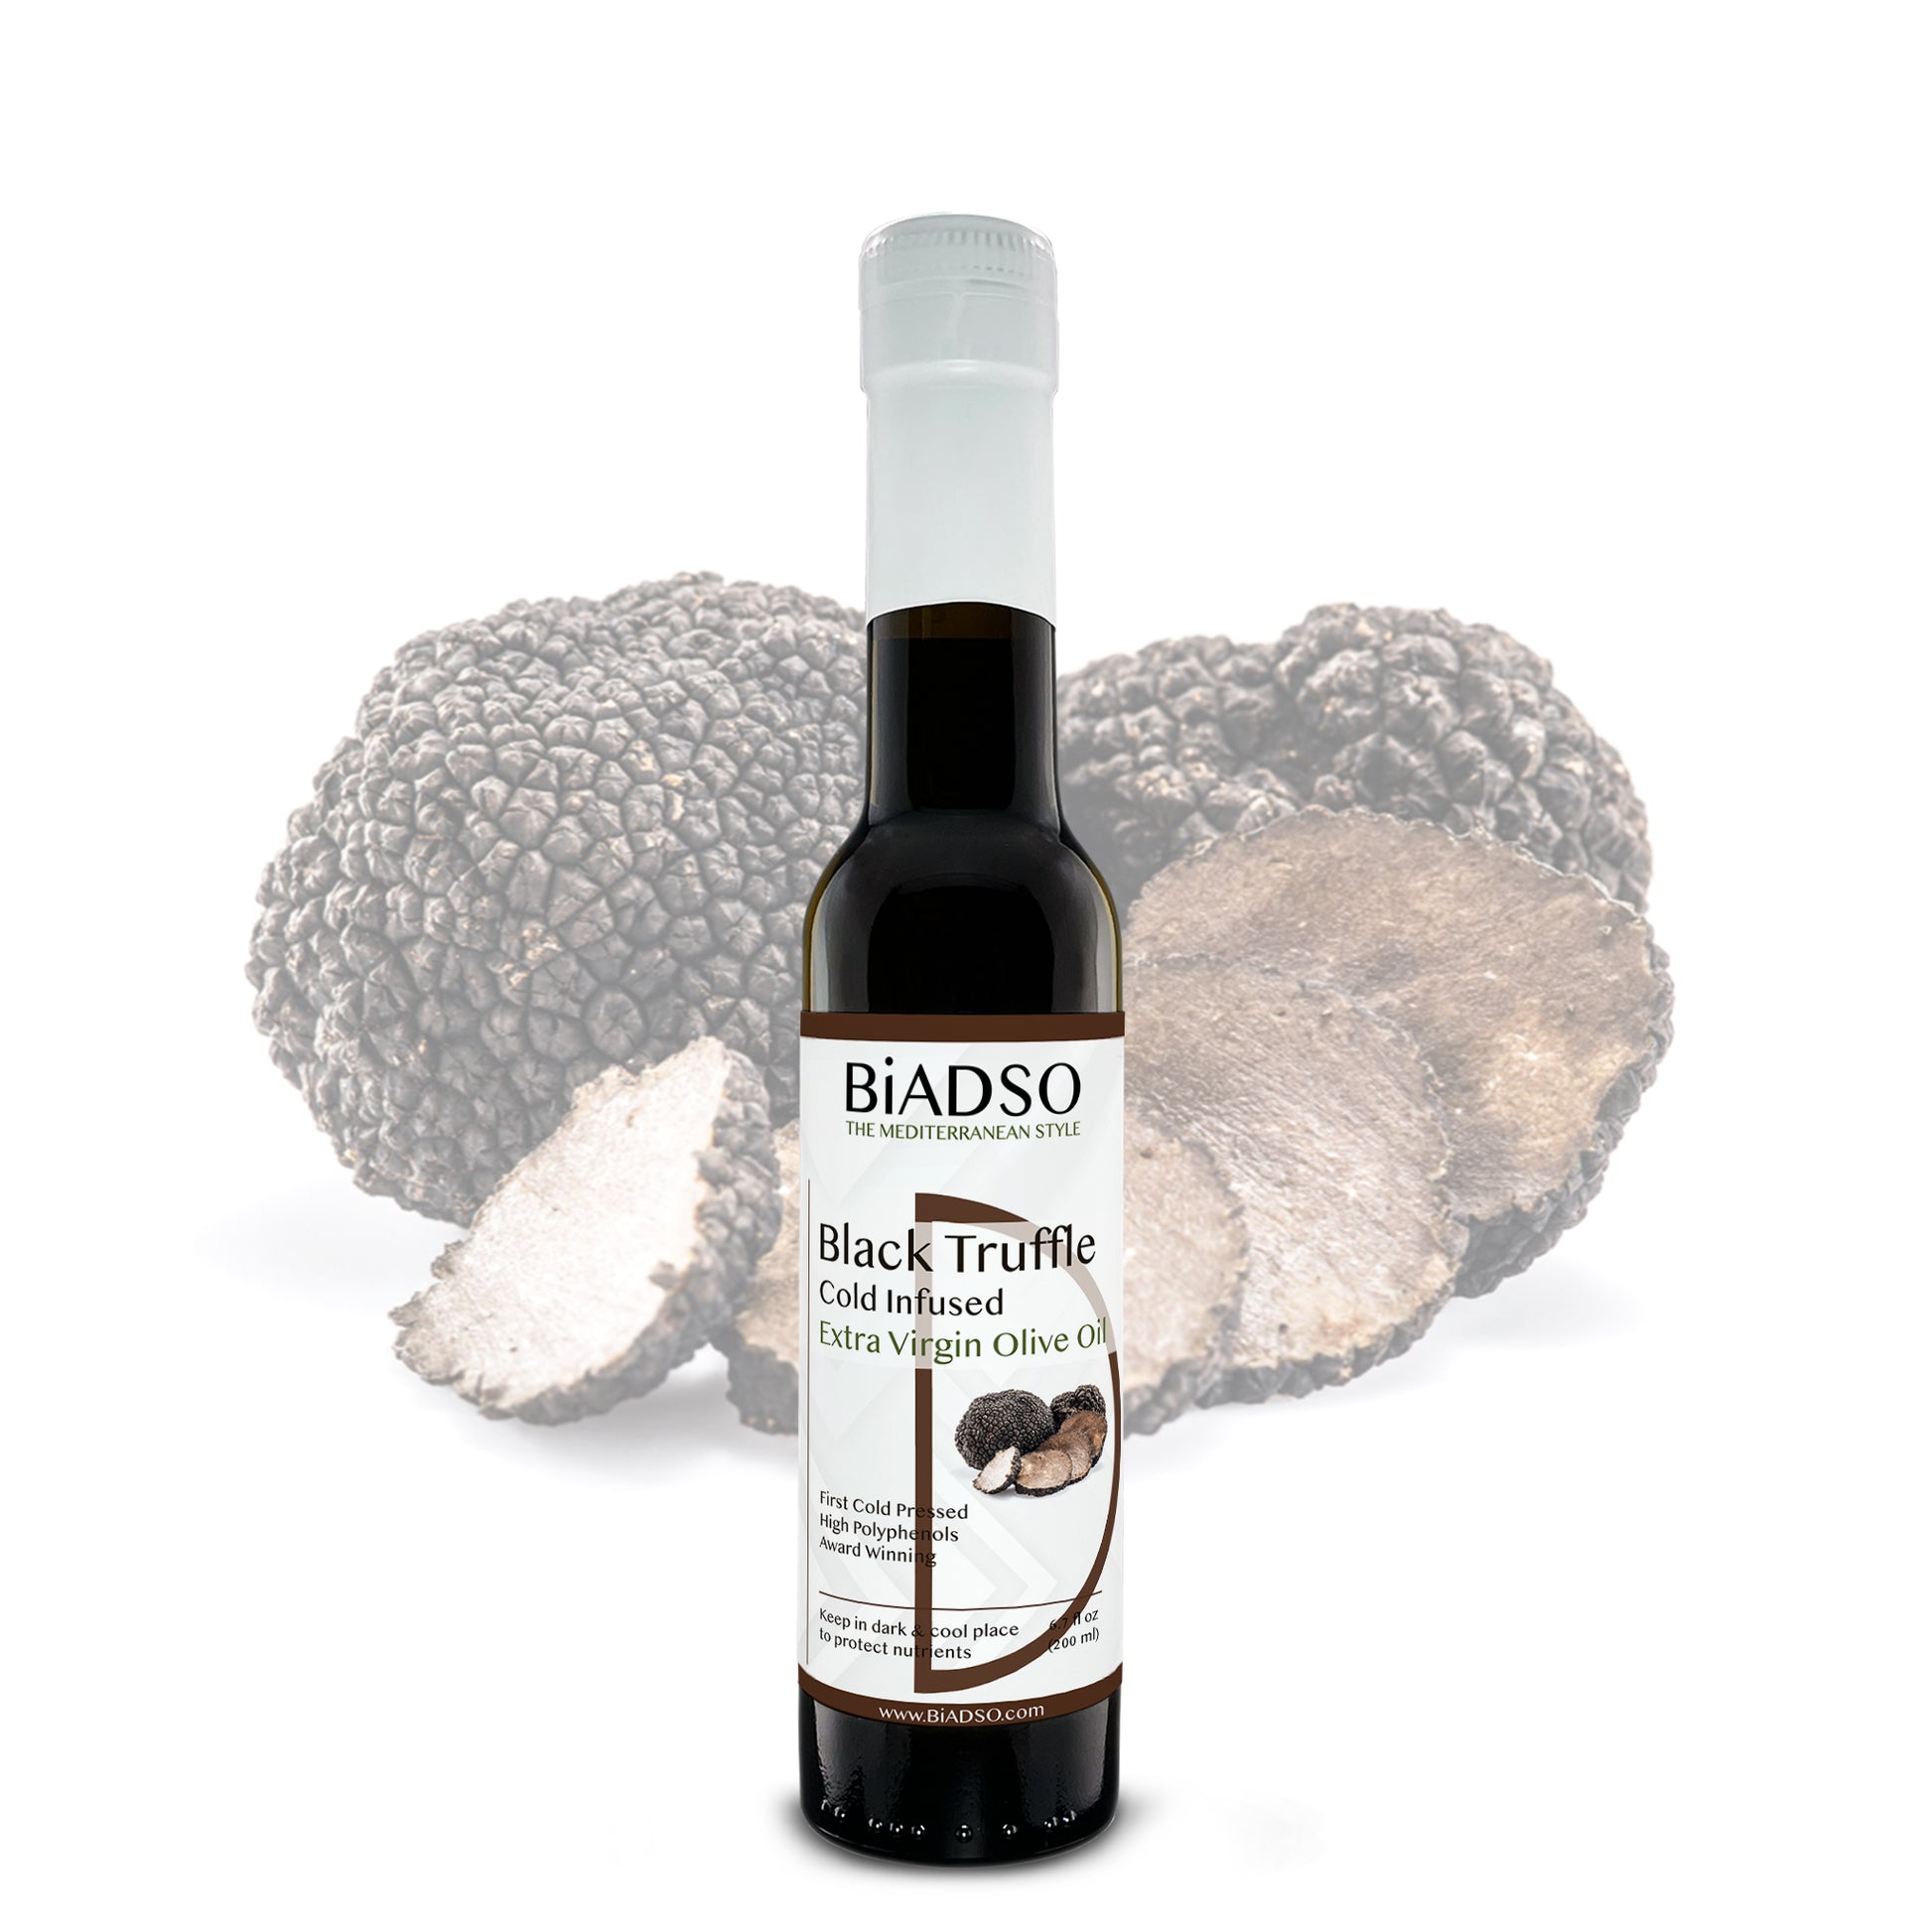 Black Truffle Oil Biadso Mediterranean Oils and Vinegars